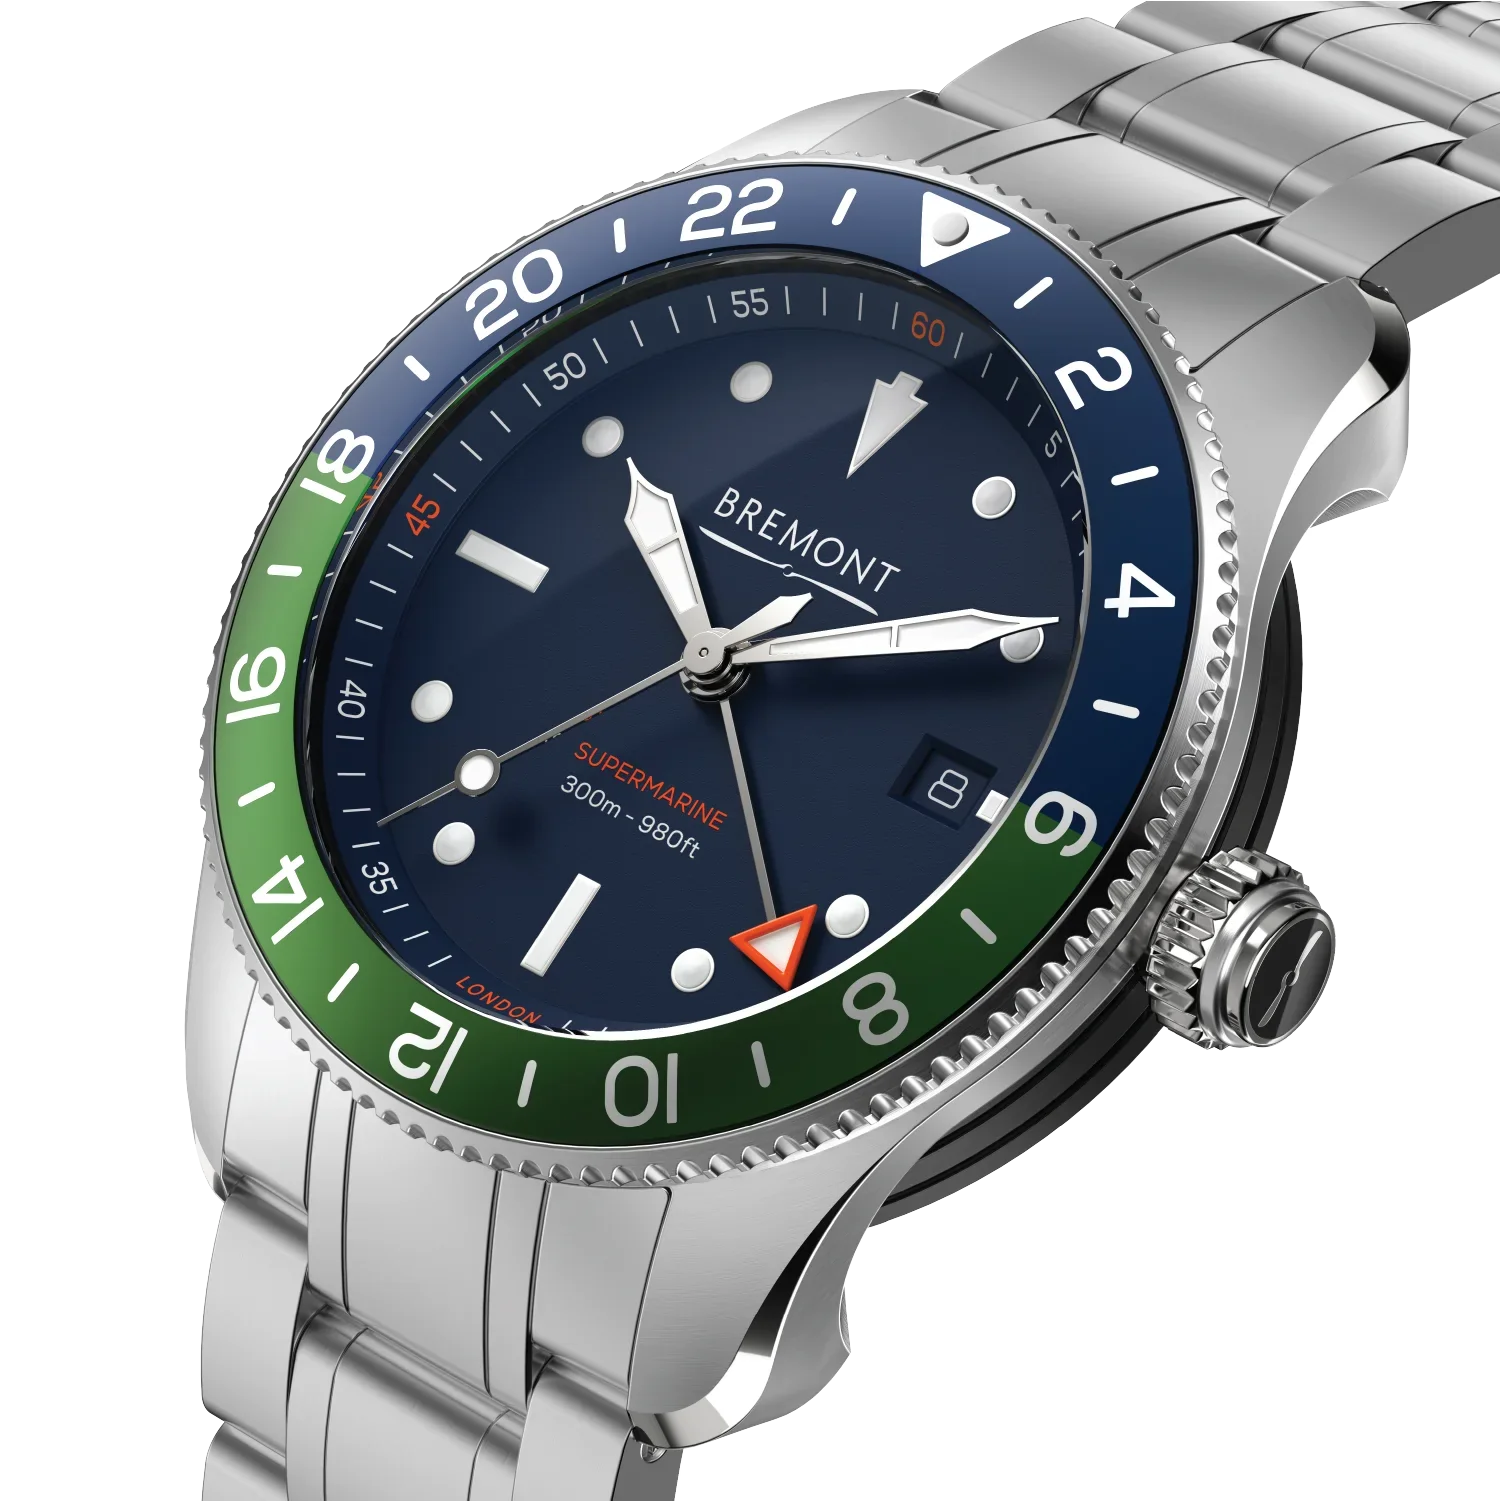 Bremont Watch Company Watches | Mens | Supermarine S302 (BLGN Bracelet)